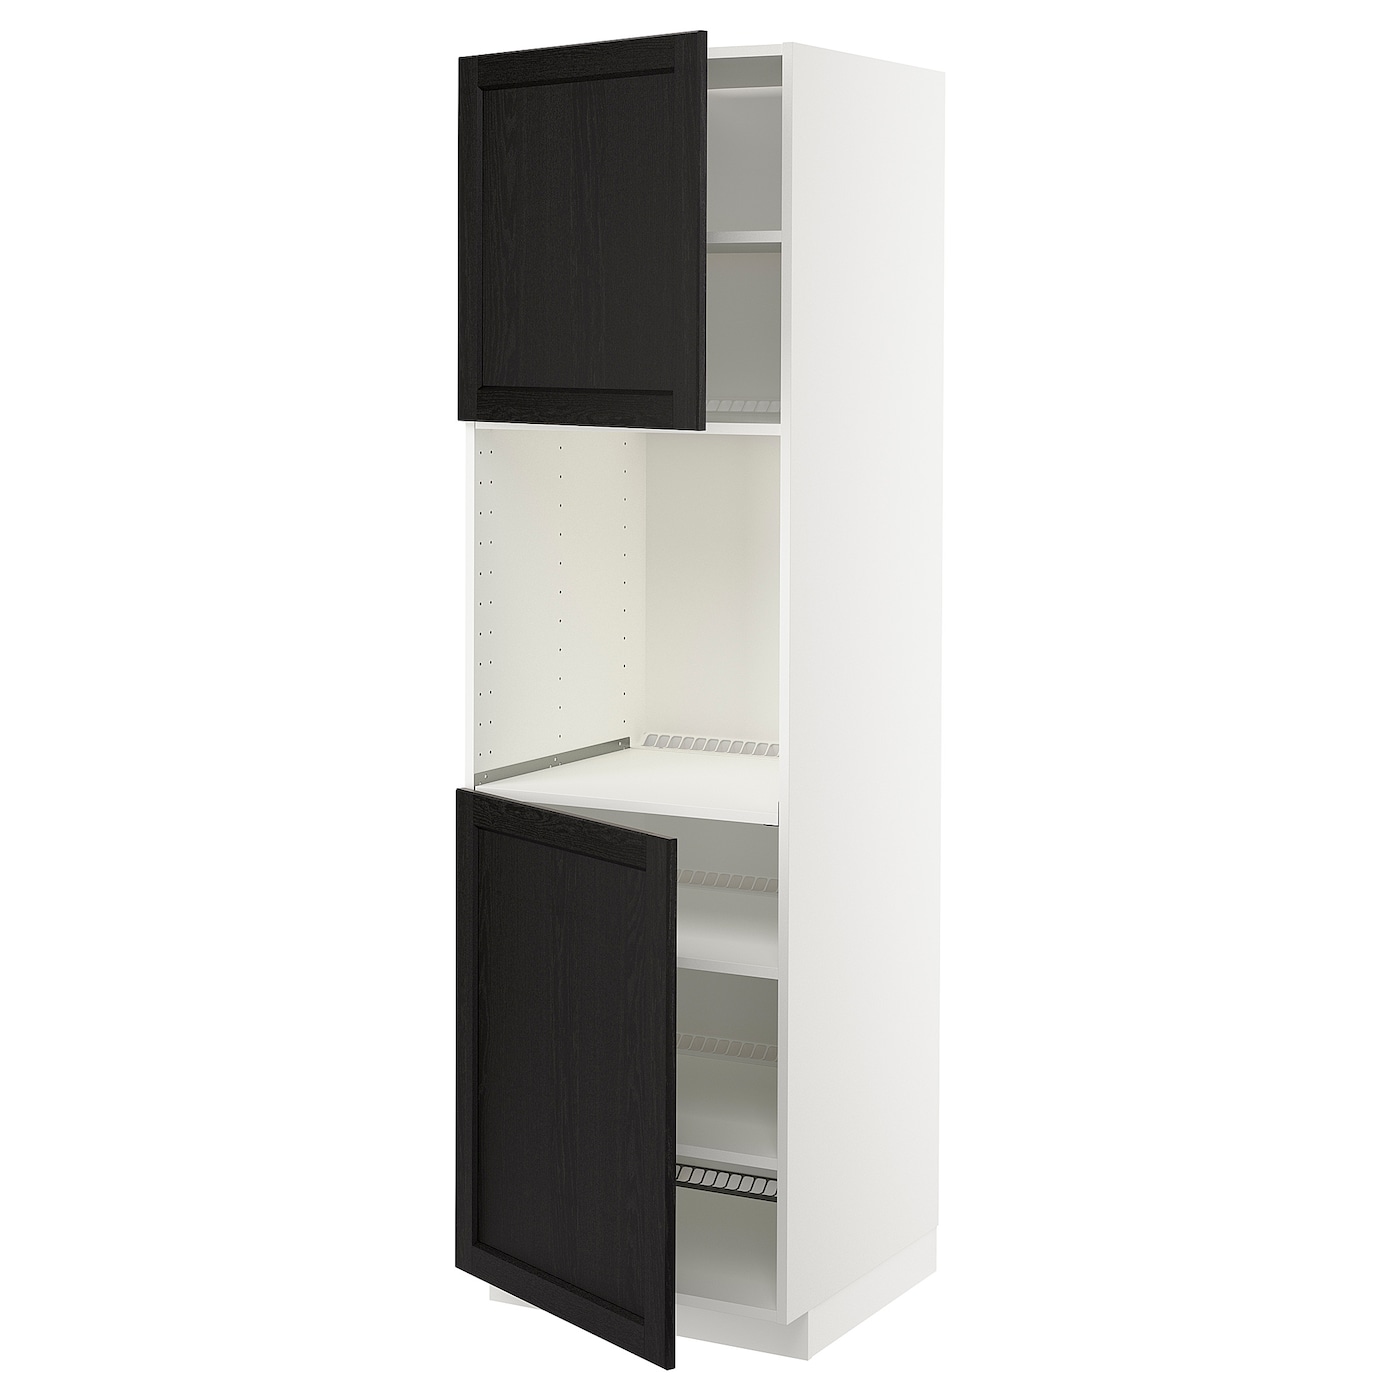 Кухонный шкаф-пенал - IKEA METOD/МЕТОД ИКЕА, 200х60х60 см, черный/белый